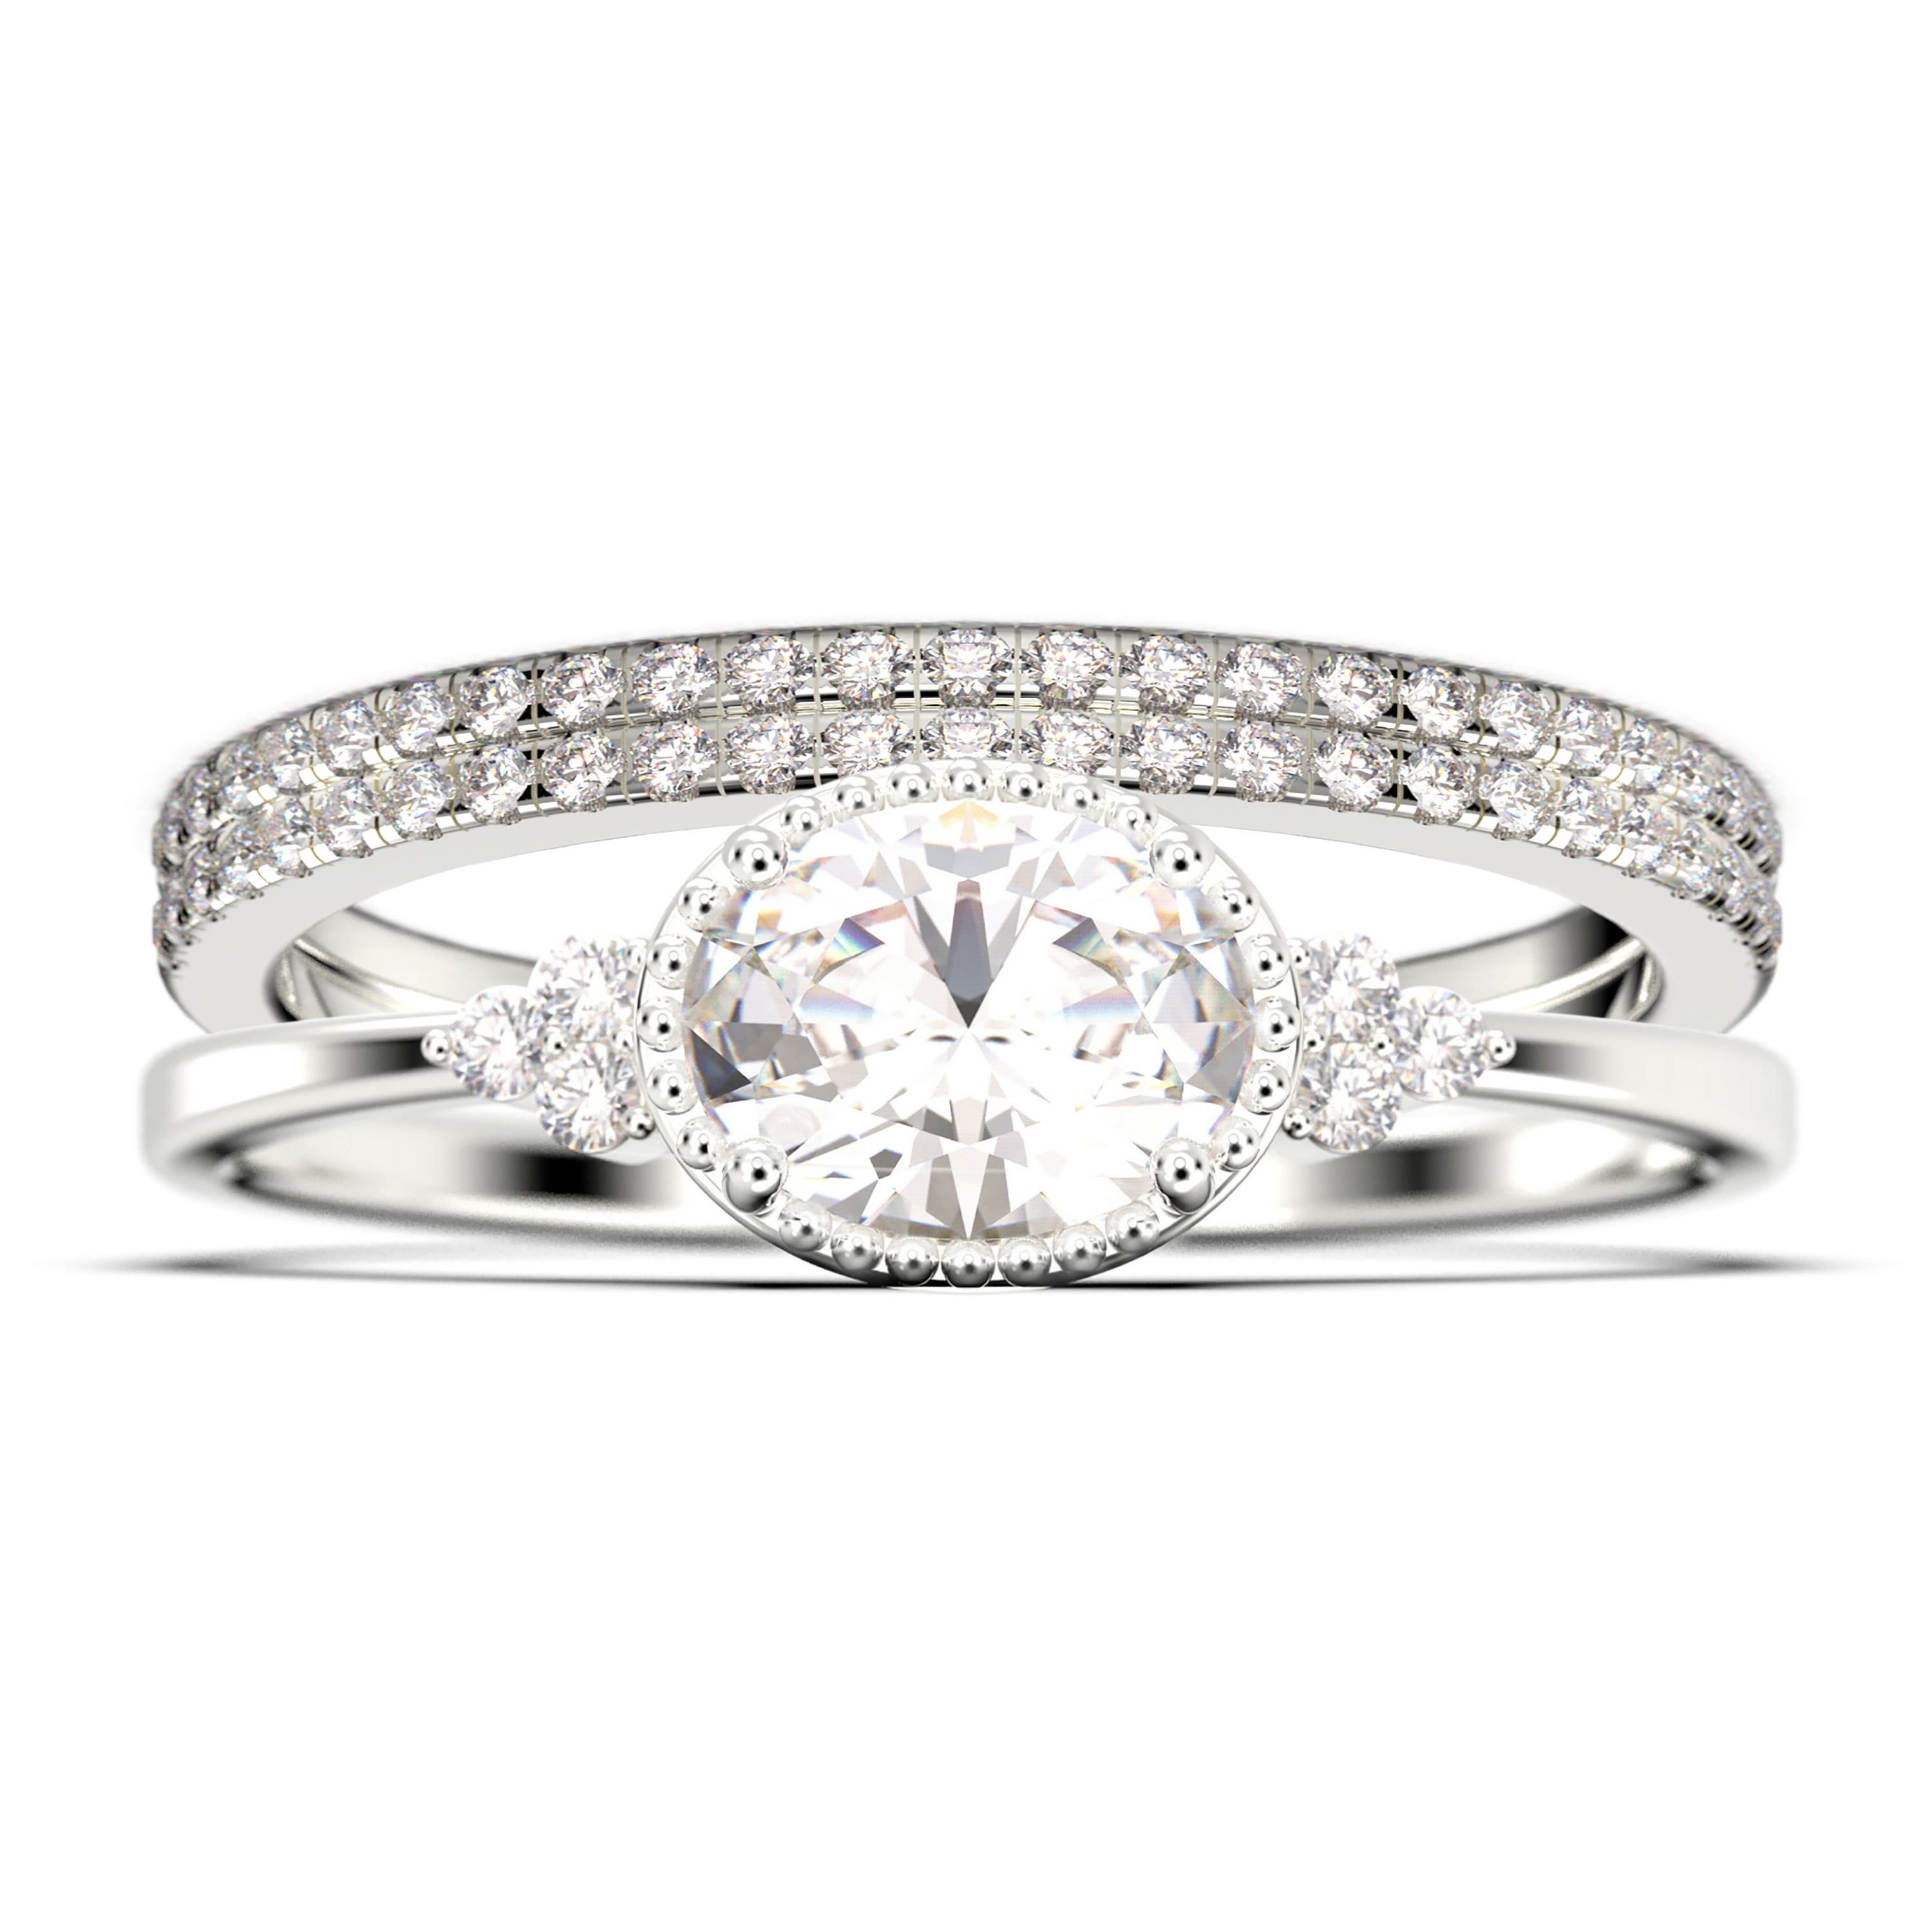 Details about   2.75 Ct Round White Diamond Engagement Wedding Valentine & Gift Ring 925 Silver 